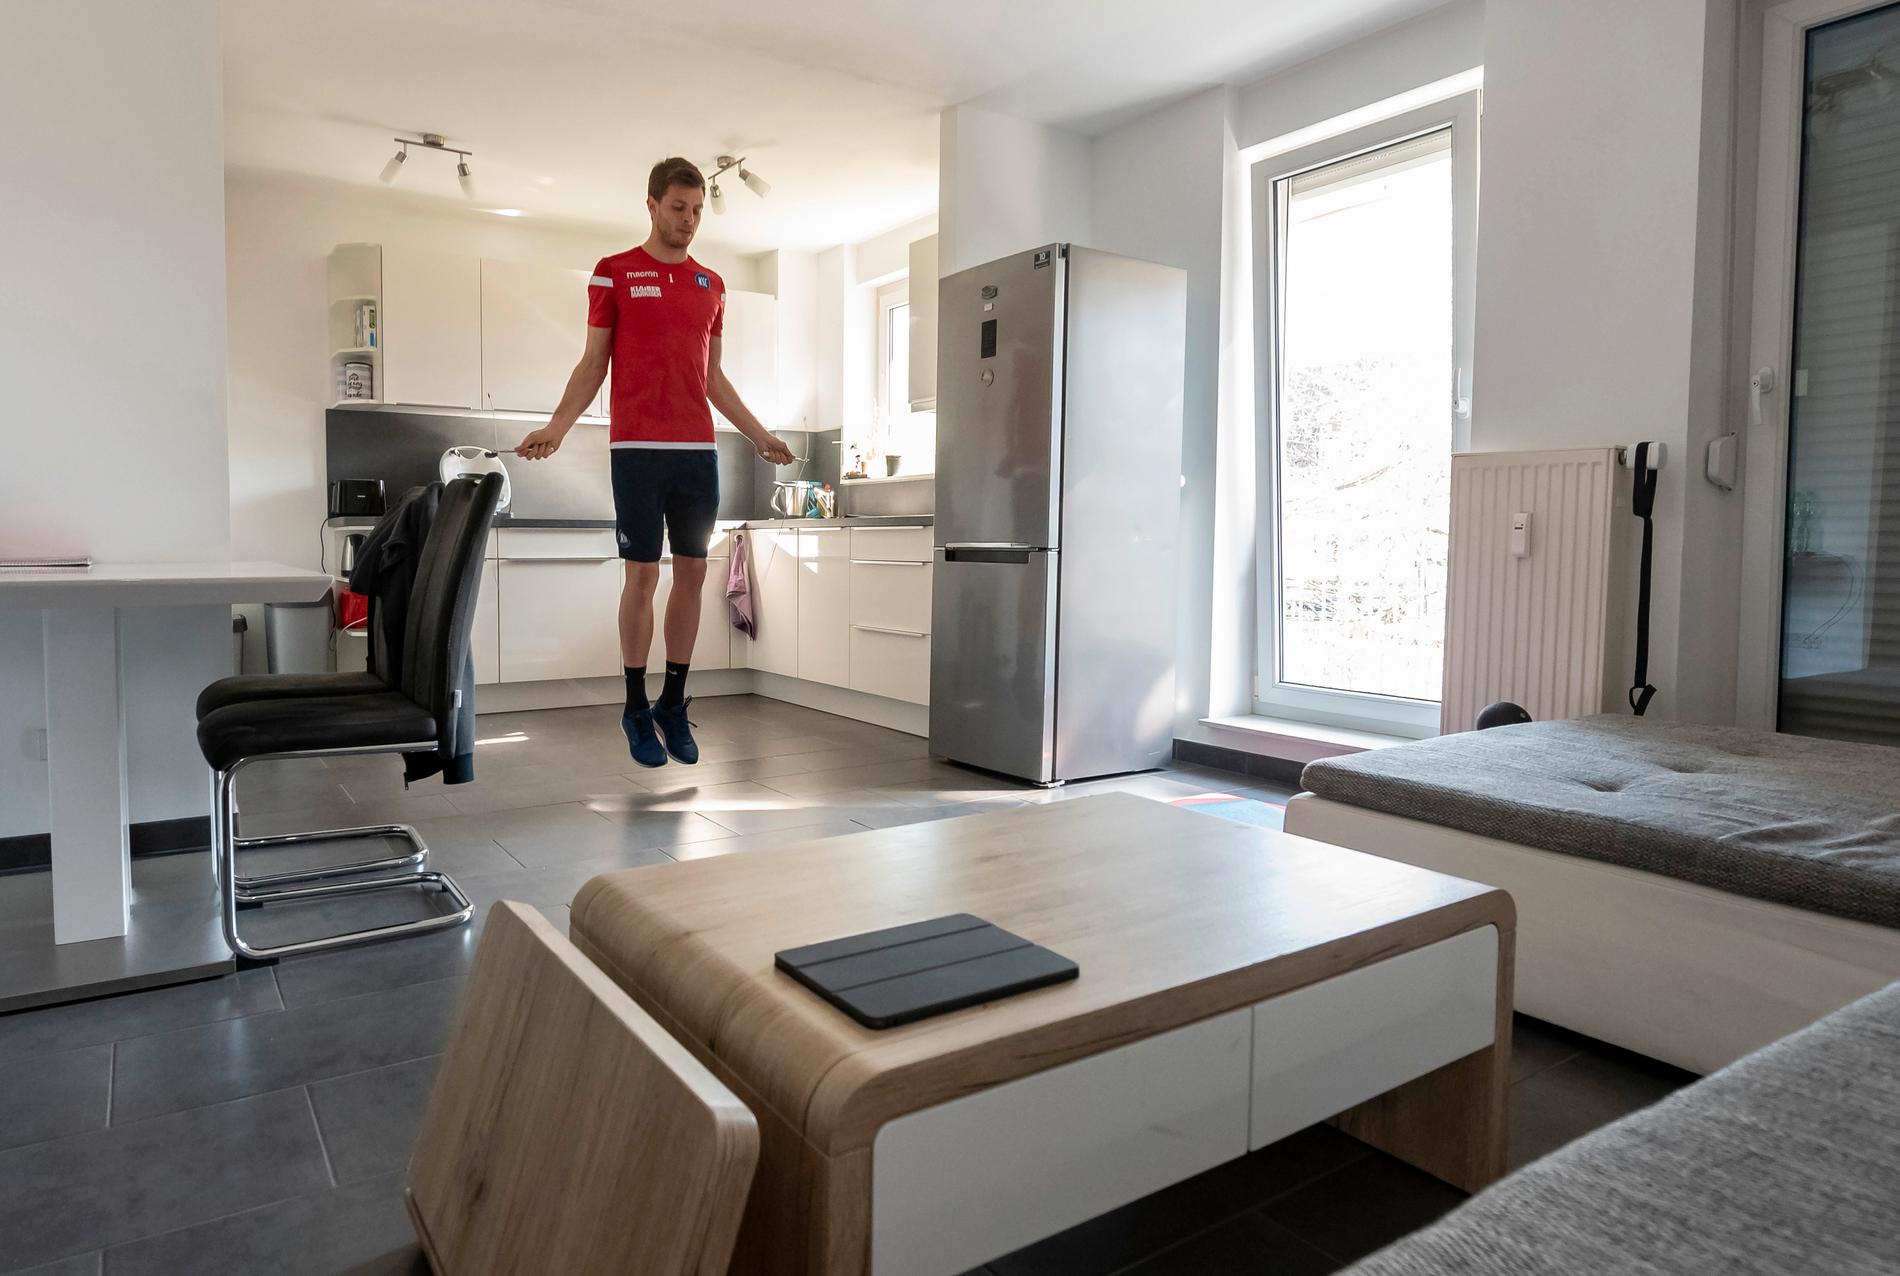 KARLSRUHE, TYSKLAND Fotbollsmålvakten Benjamin Uphoff kör ett pass hopprep hemma i lägenheten på tisdagen. Klubben Karlsruher SC har beordrat vistelse i hemmet.